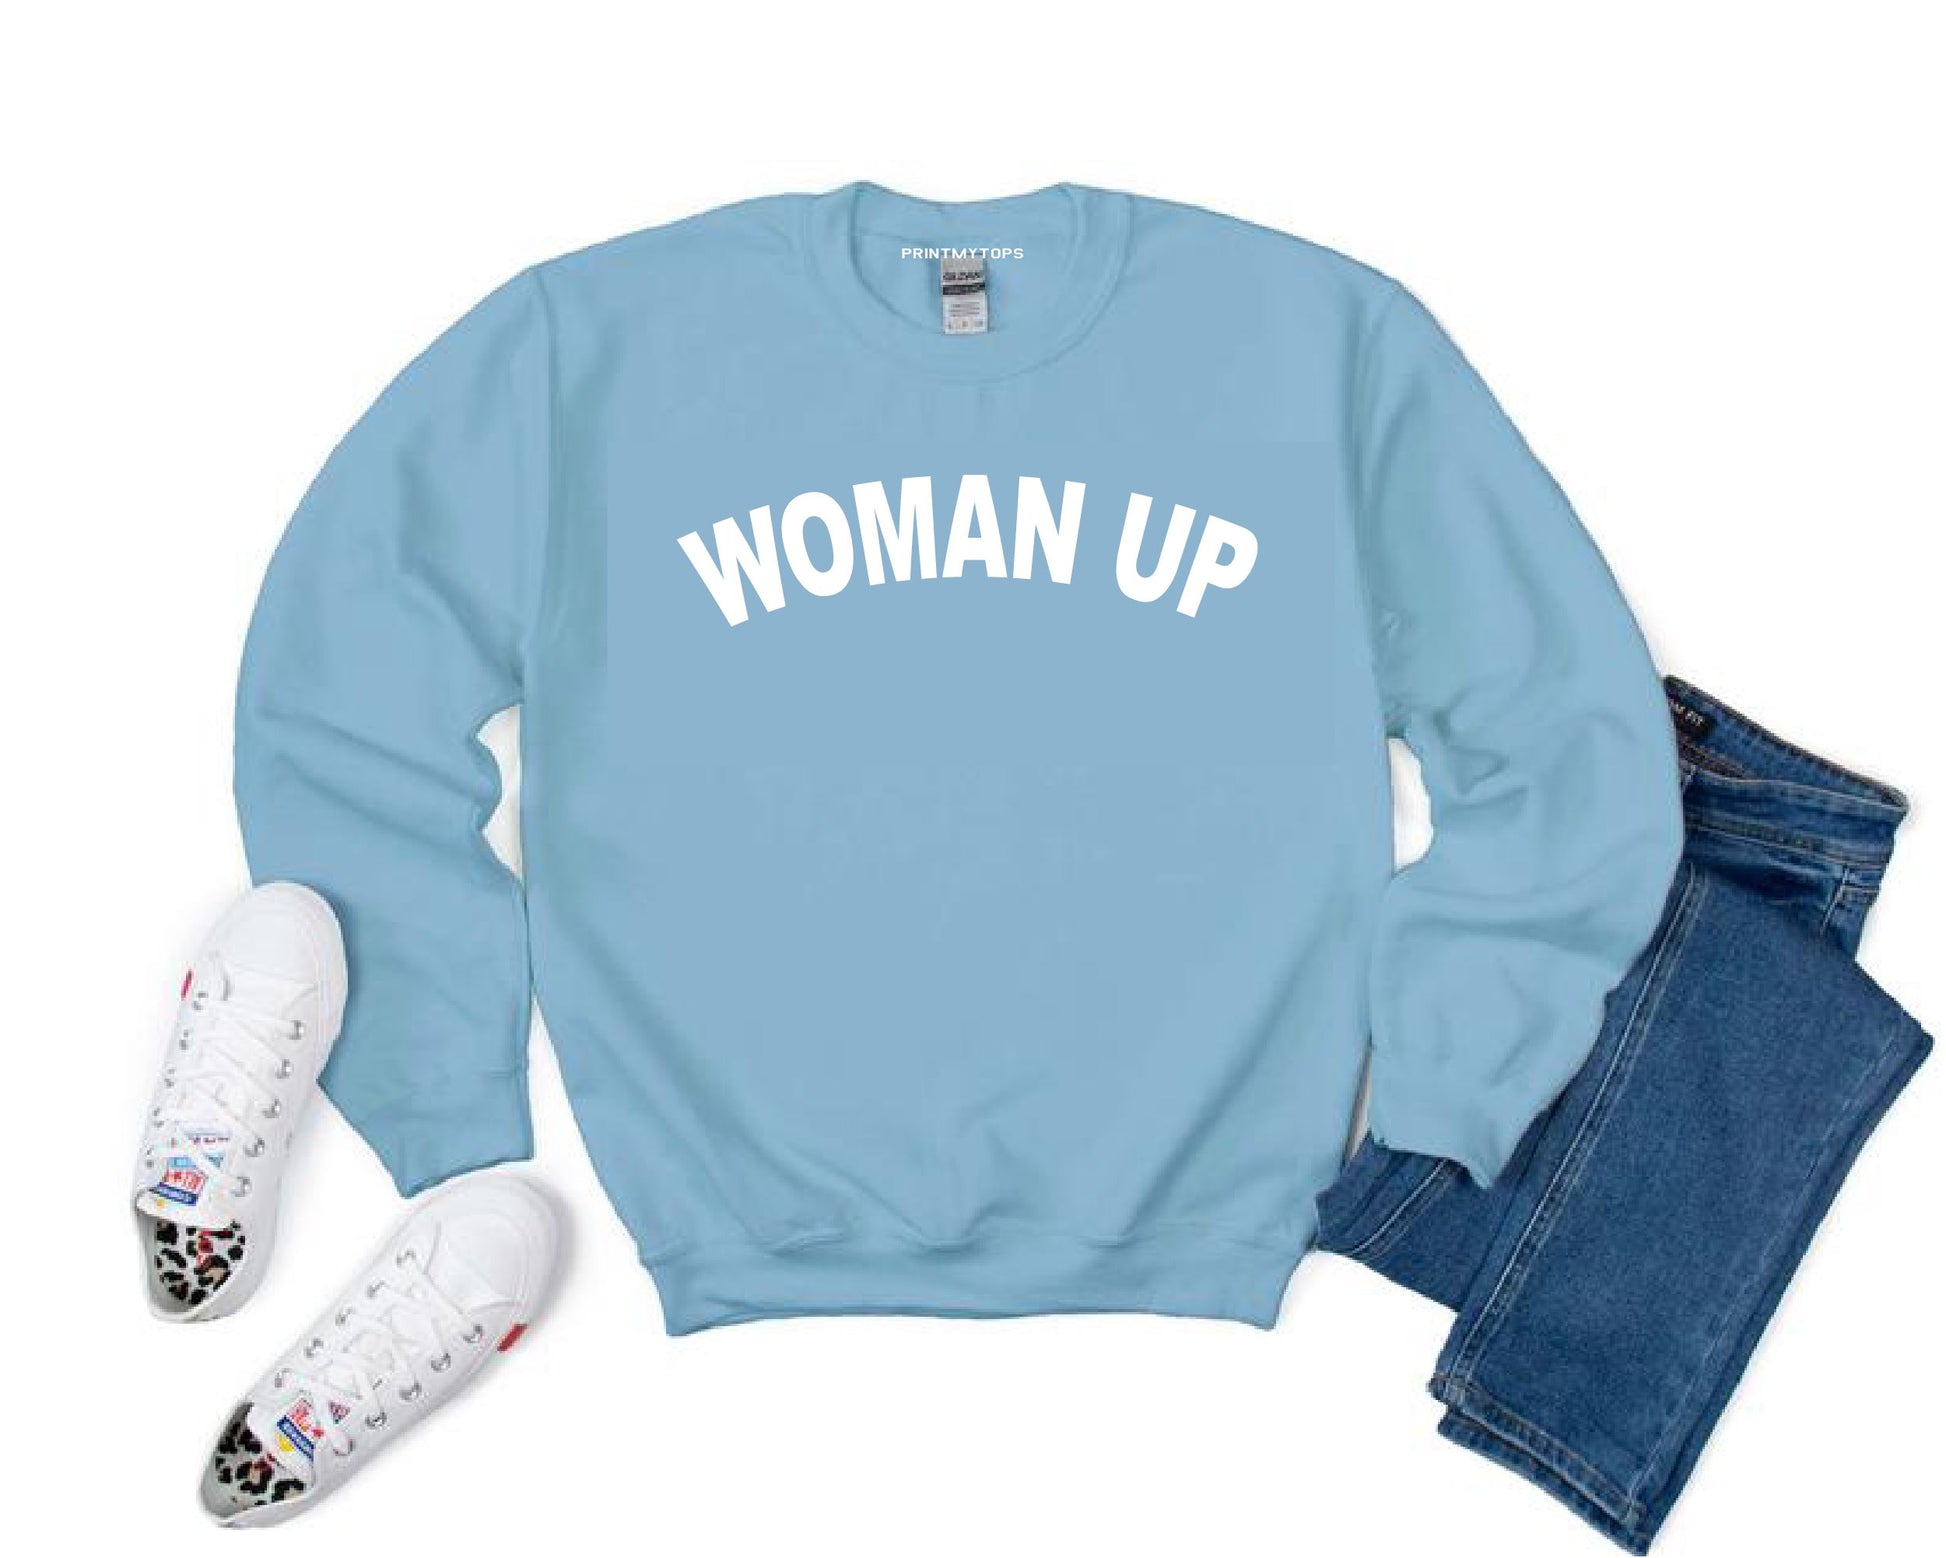 Woman Up Feminist Sweatshirt